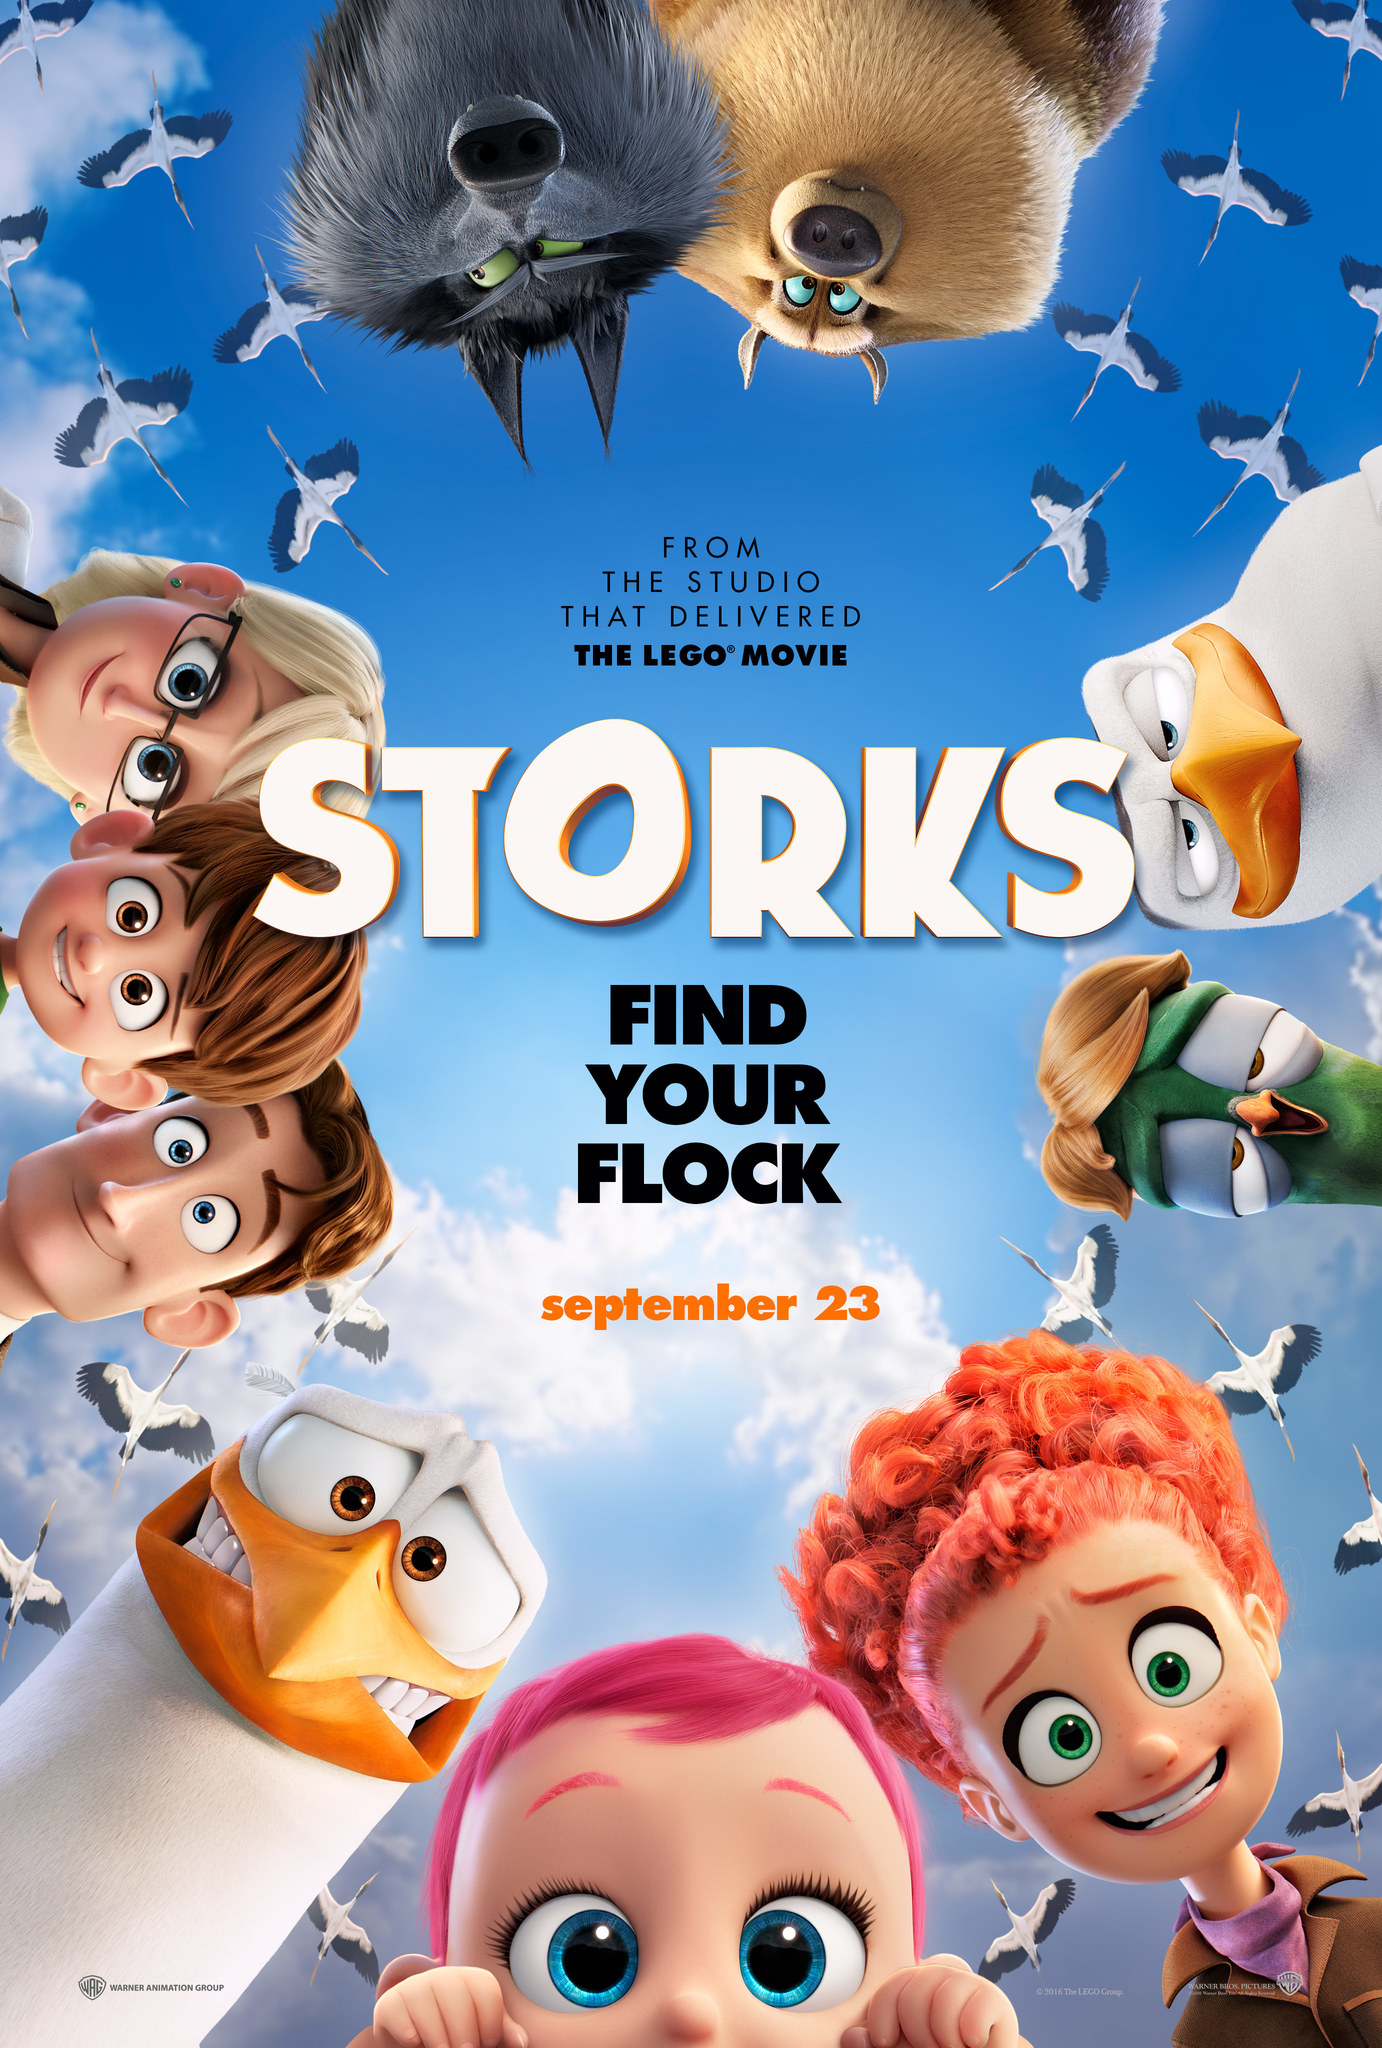 ananias lee fayne share storks movie in hindi photos